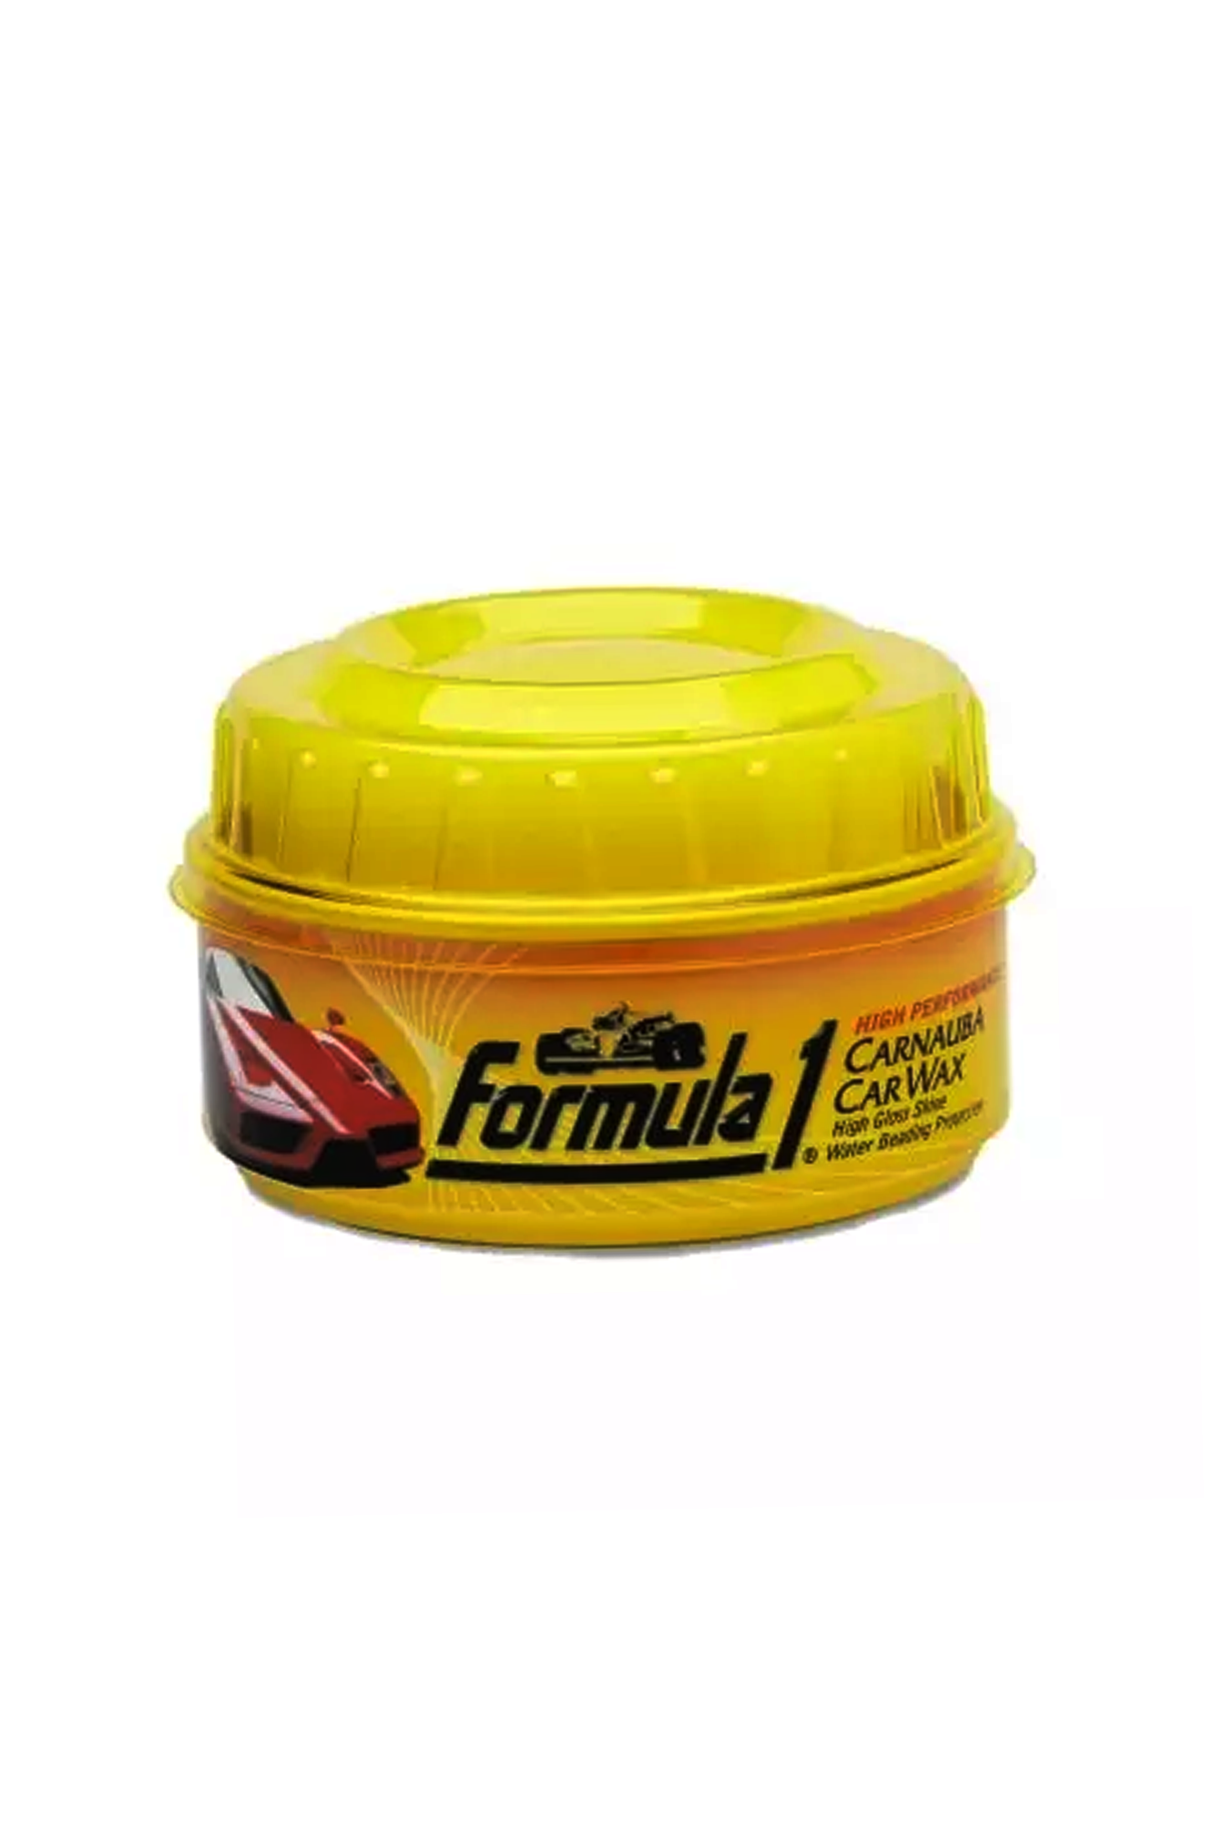 formula1 car wax 340g